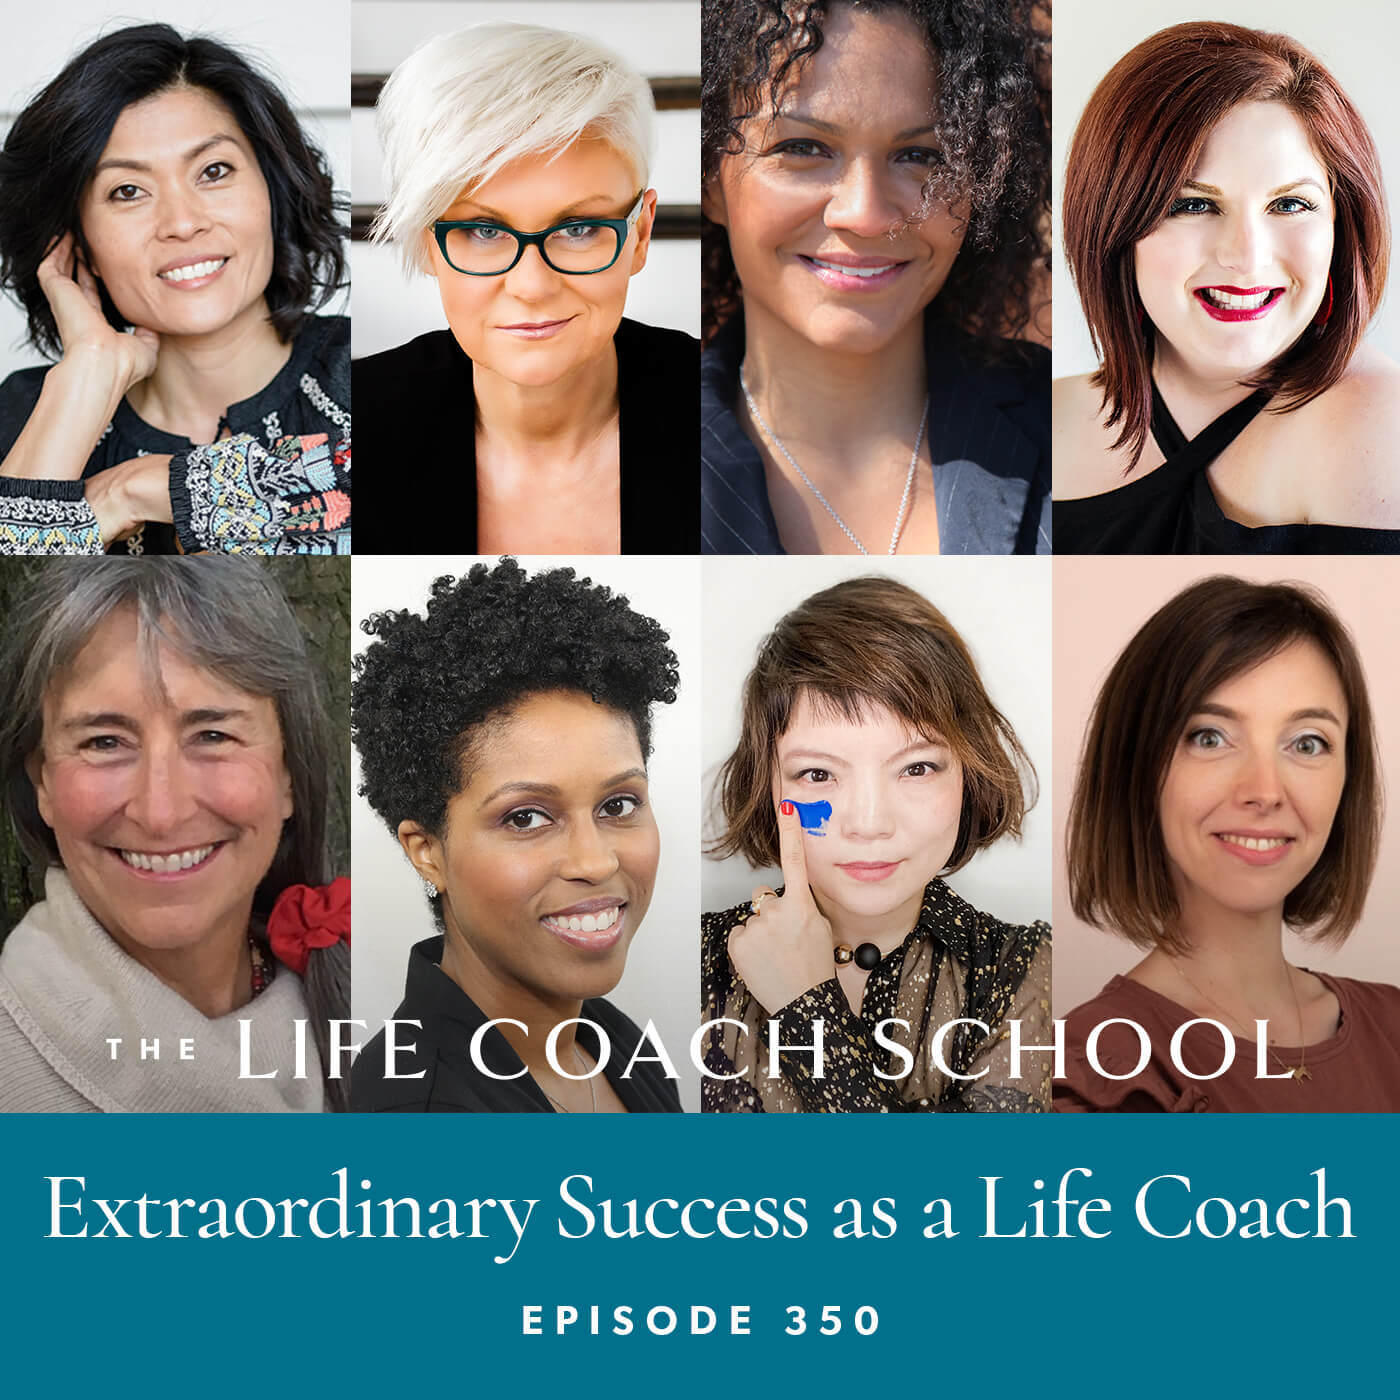 The Life Coach School Podcast with Brooke Castillo | Extraordinary Success as a Life Coach